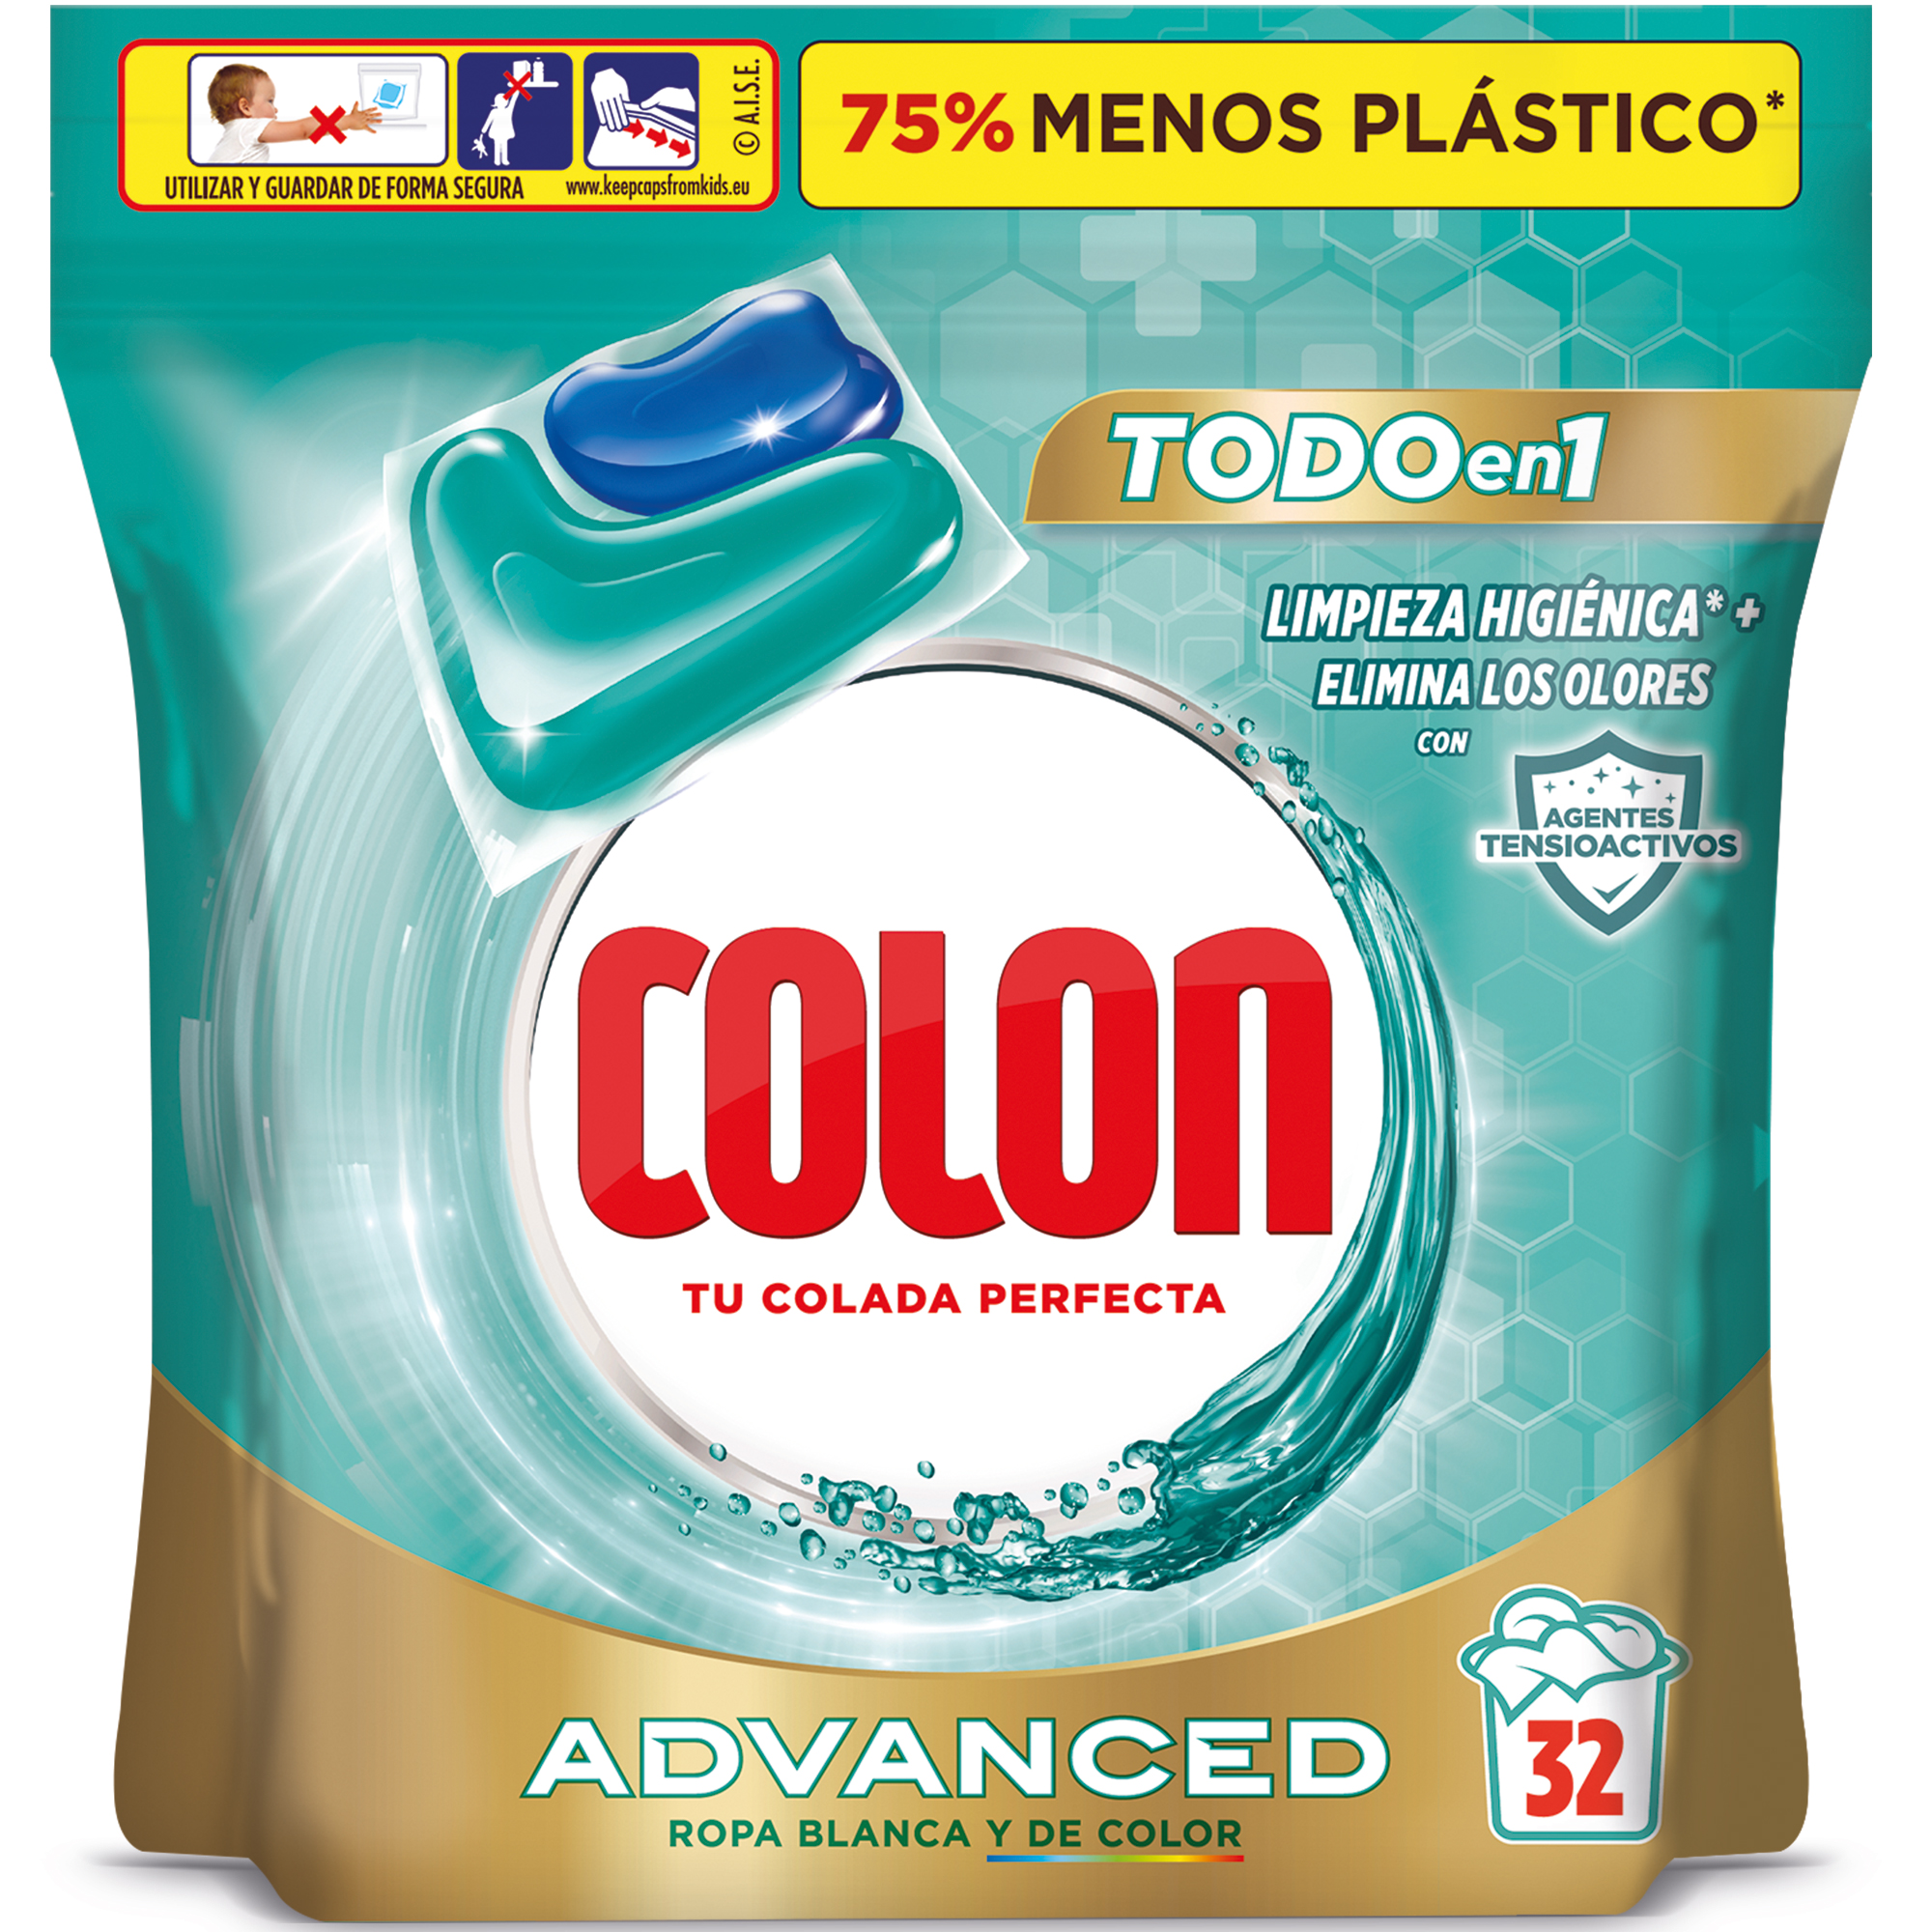 Colon - Colon Higiene Advanced Detergente para la ropa - 32 cápsulas